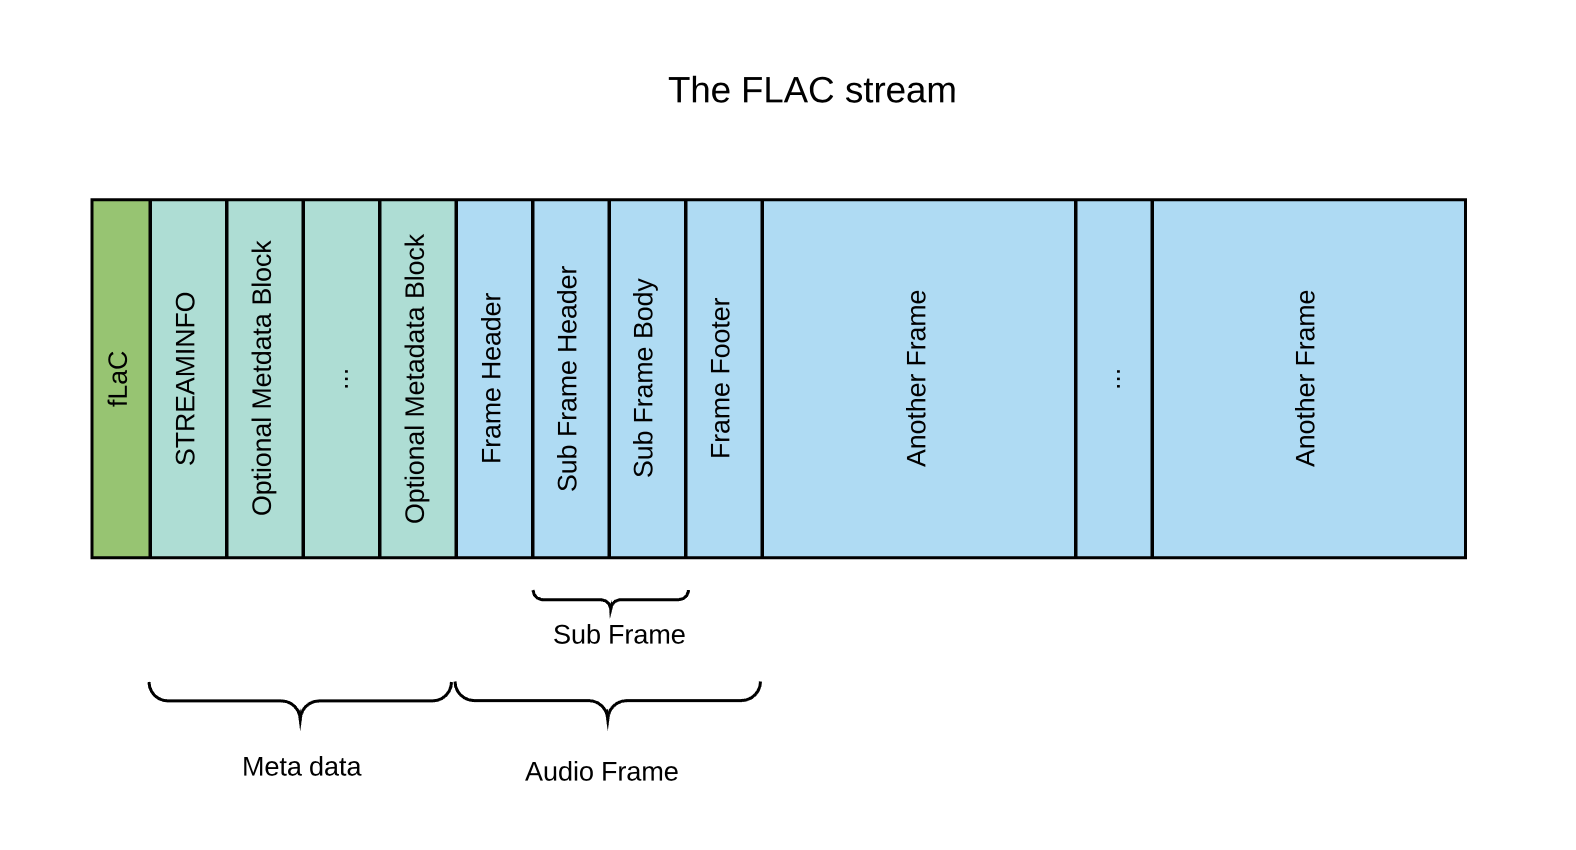 The FLAC stream